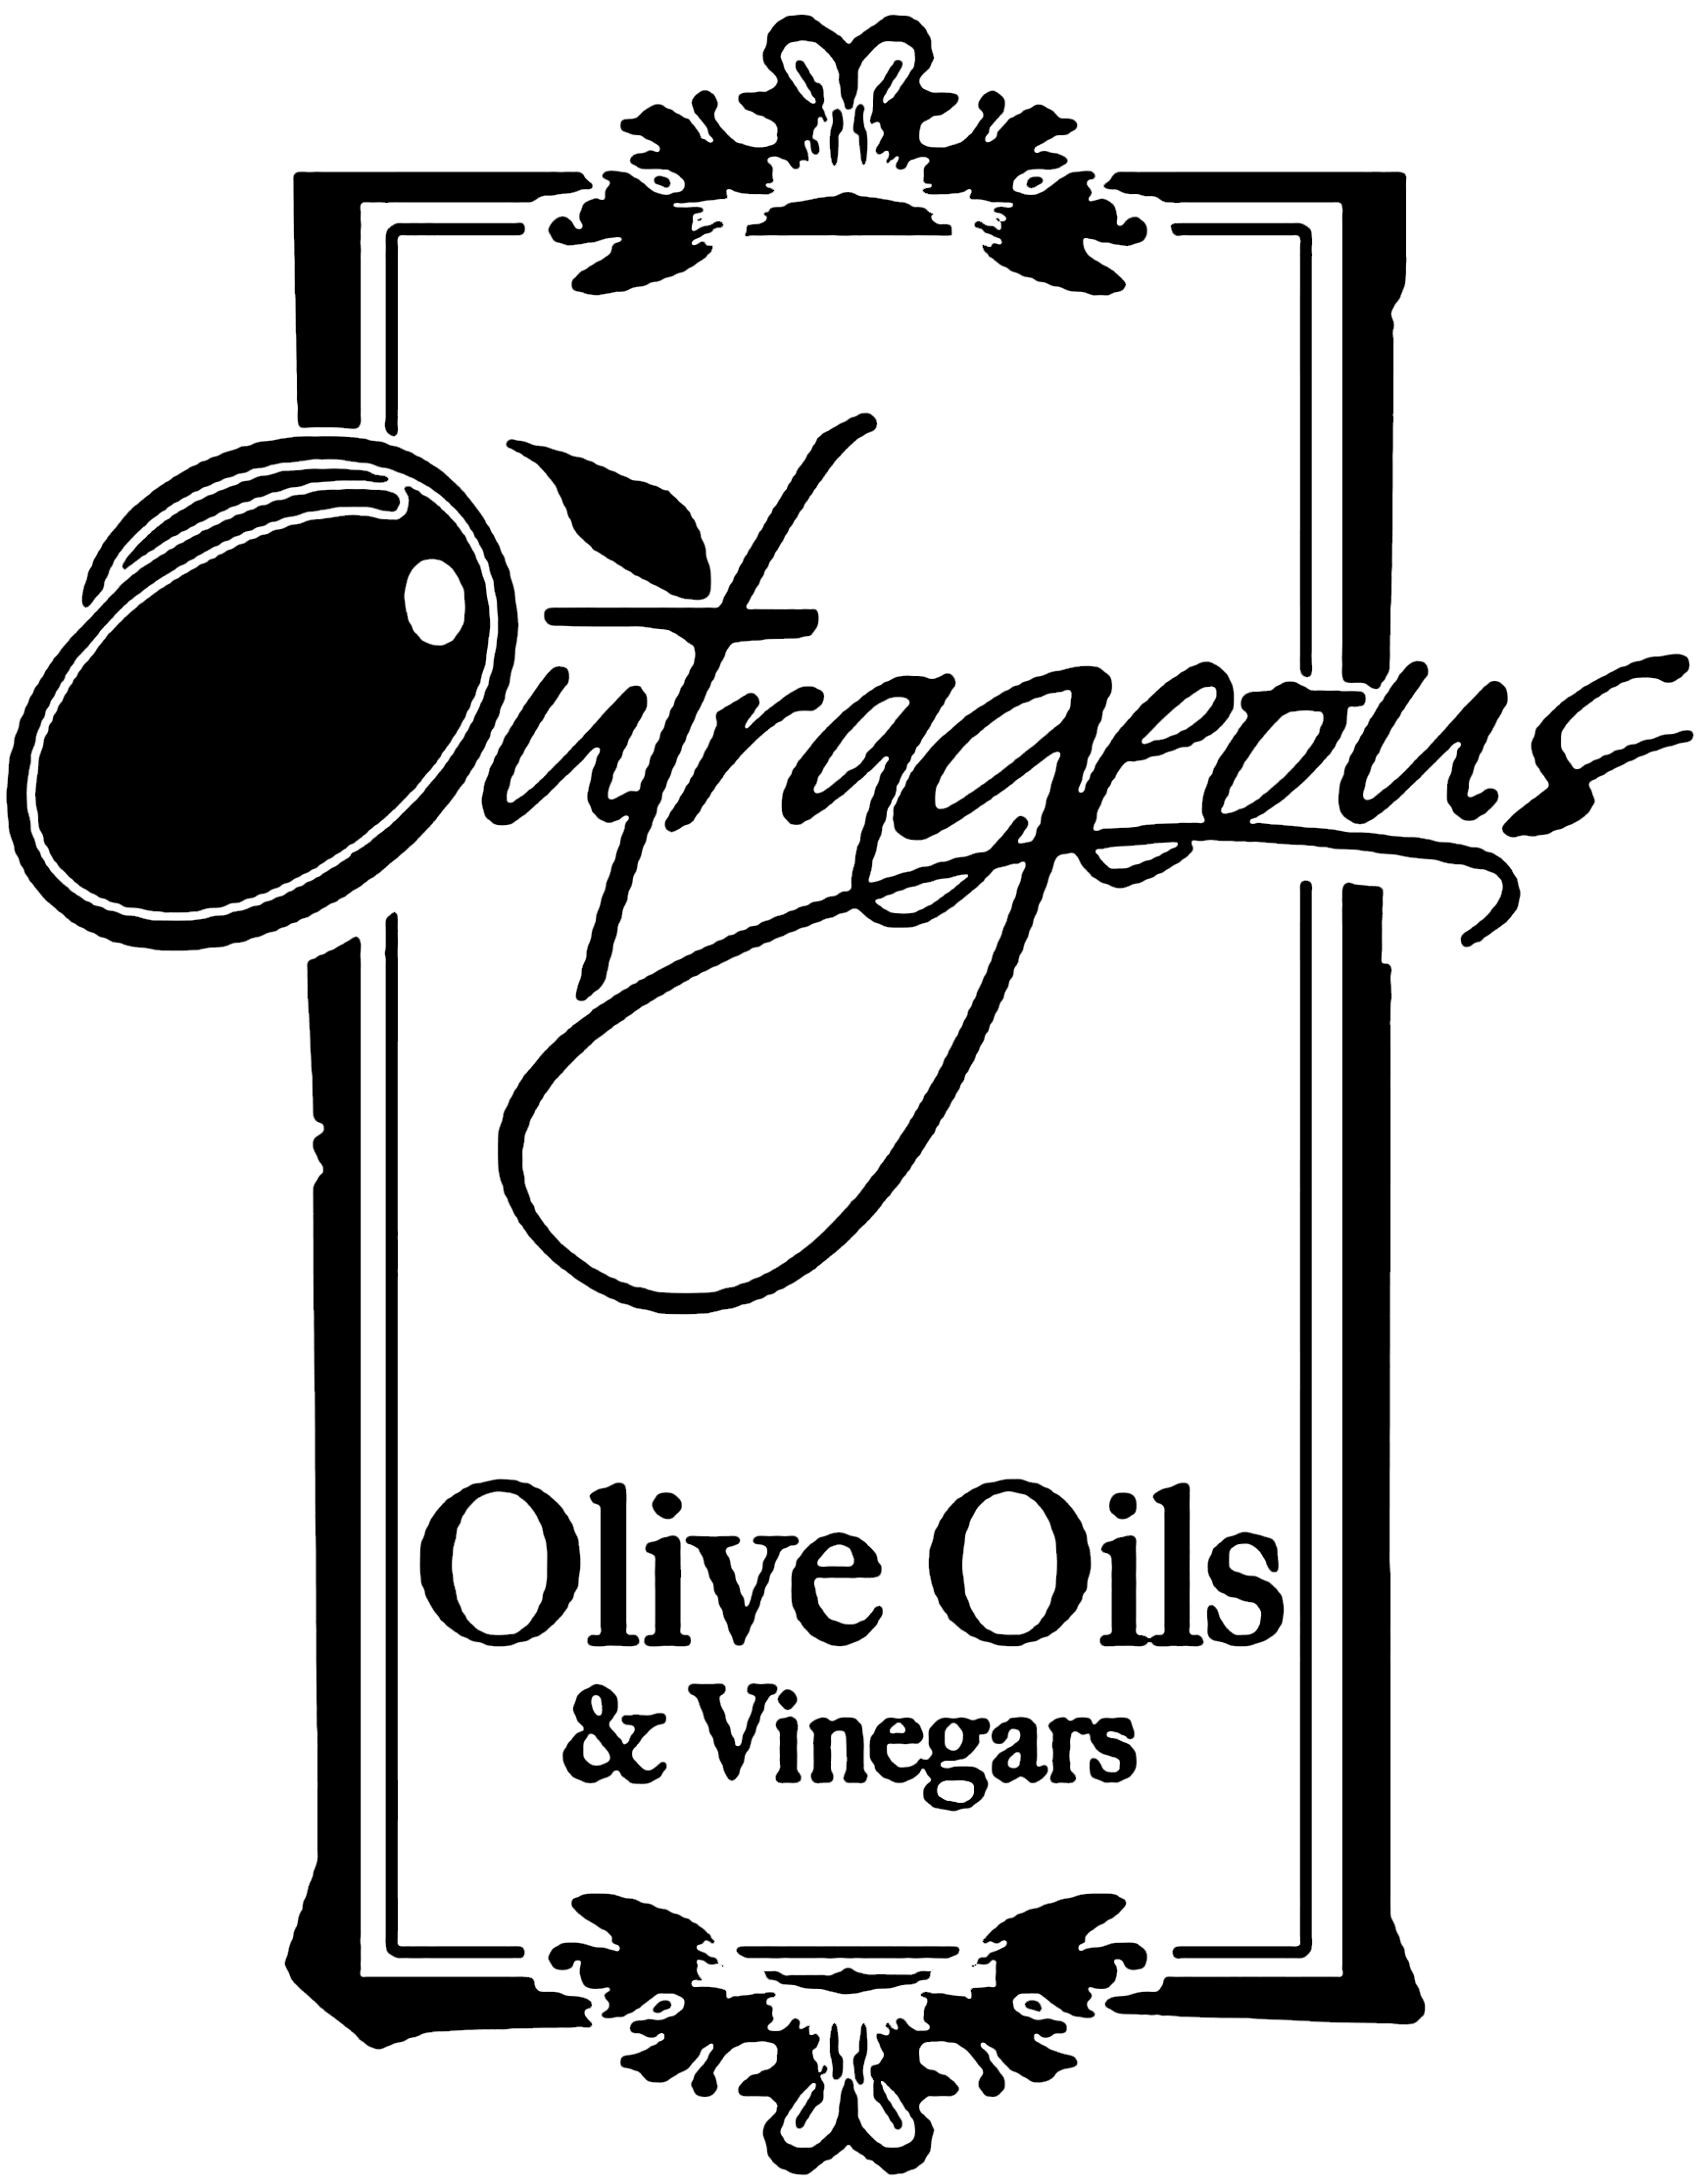 Black Currant Dark Balsamic Vinegar | Outrageous Olive Oils & Vinegars